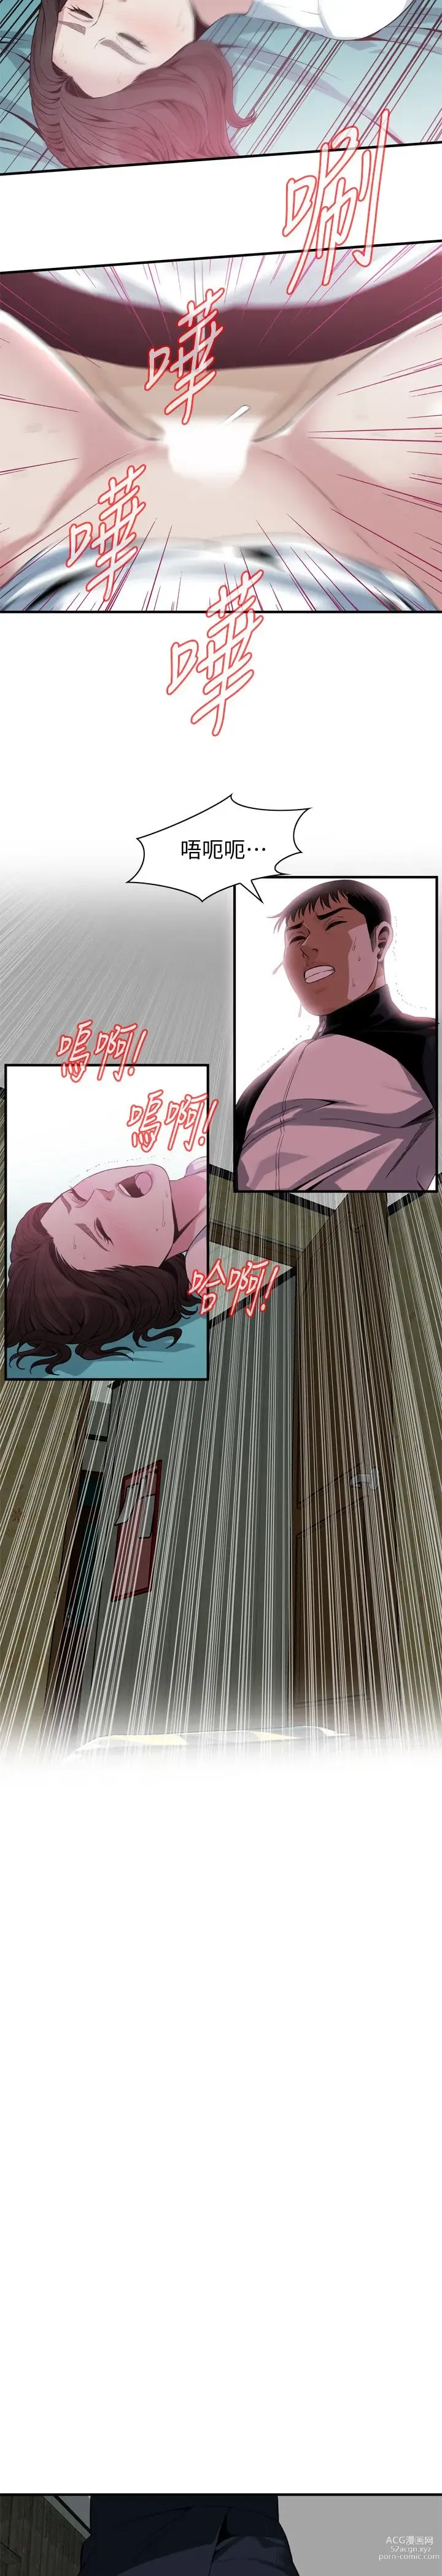 Page 10 of manga 偷窥 171-217